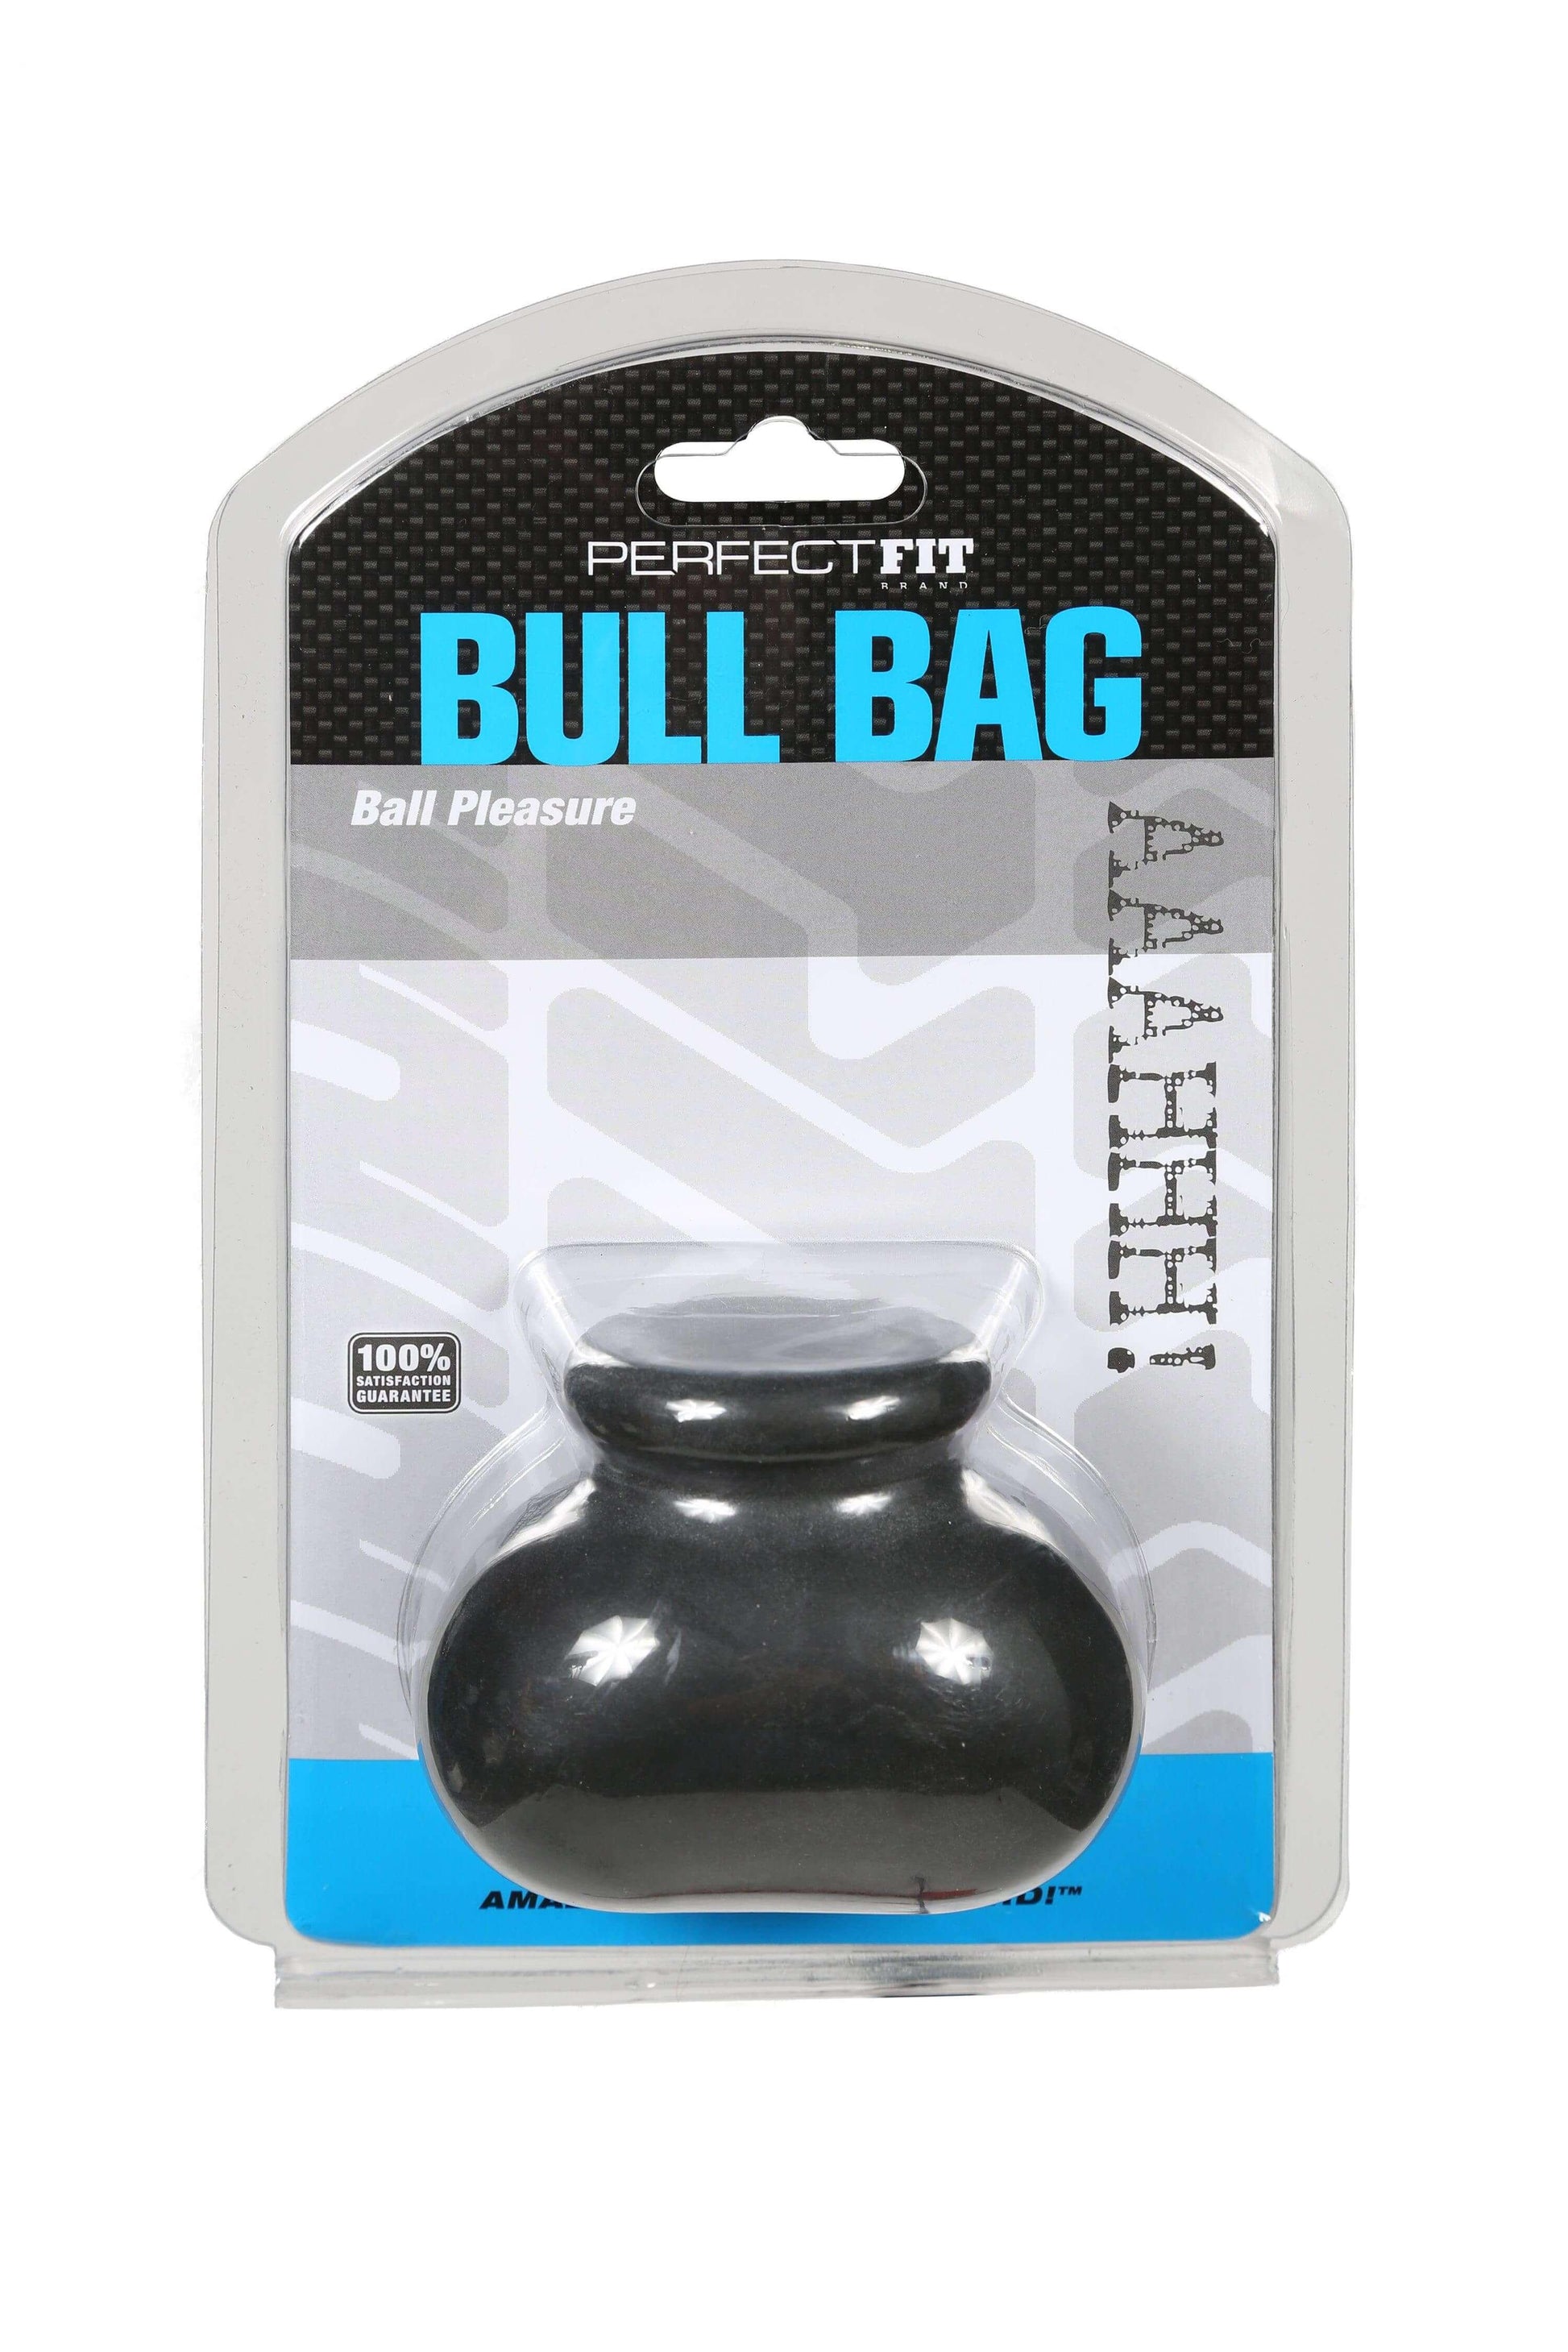 Bull Bag Black - Take A Peek